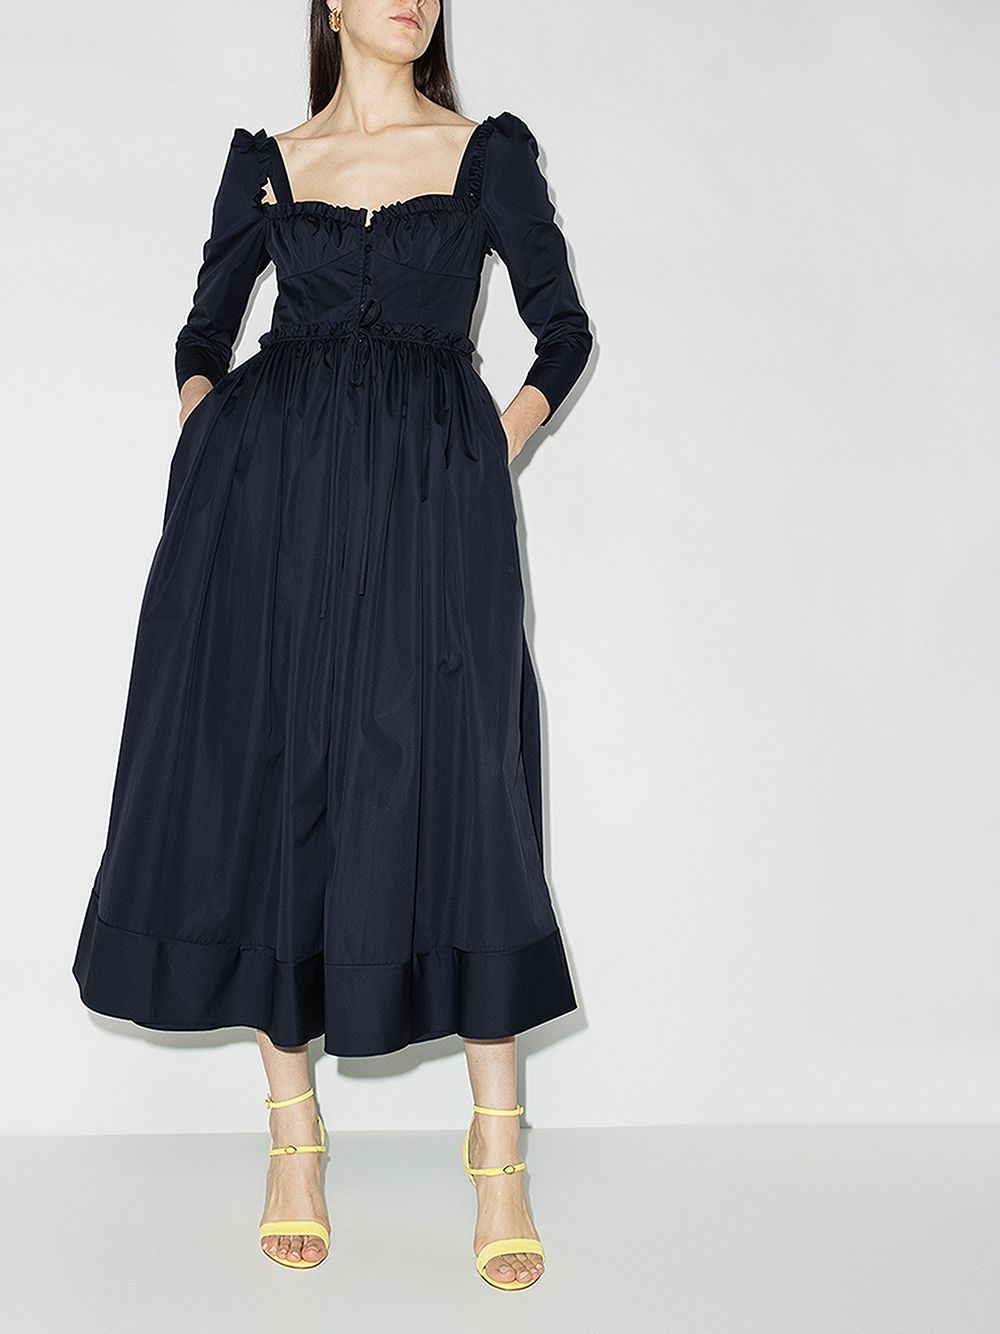 Rosie Assoulin Winter Garden Party Cotton Midi Dress - Farfetch